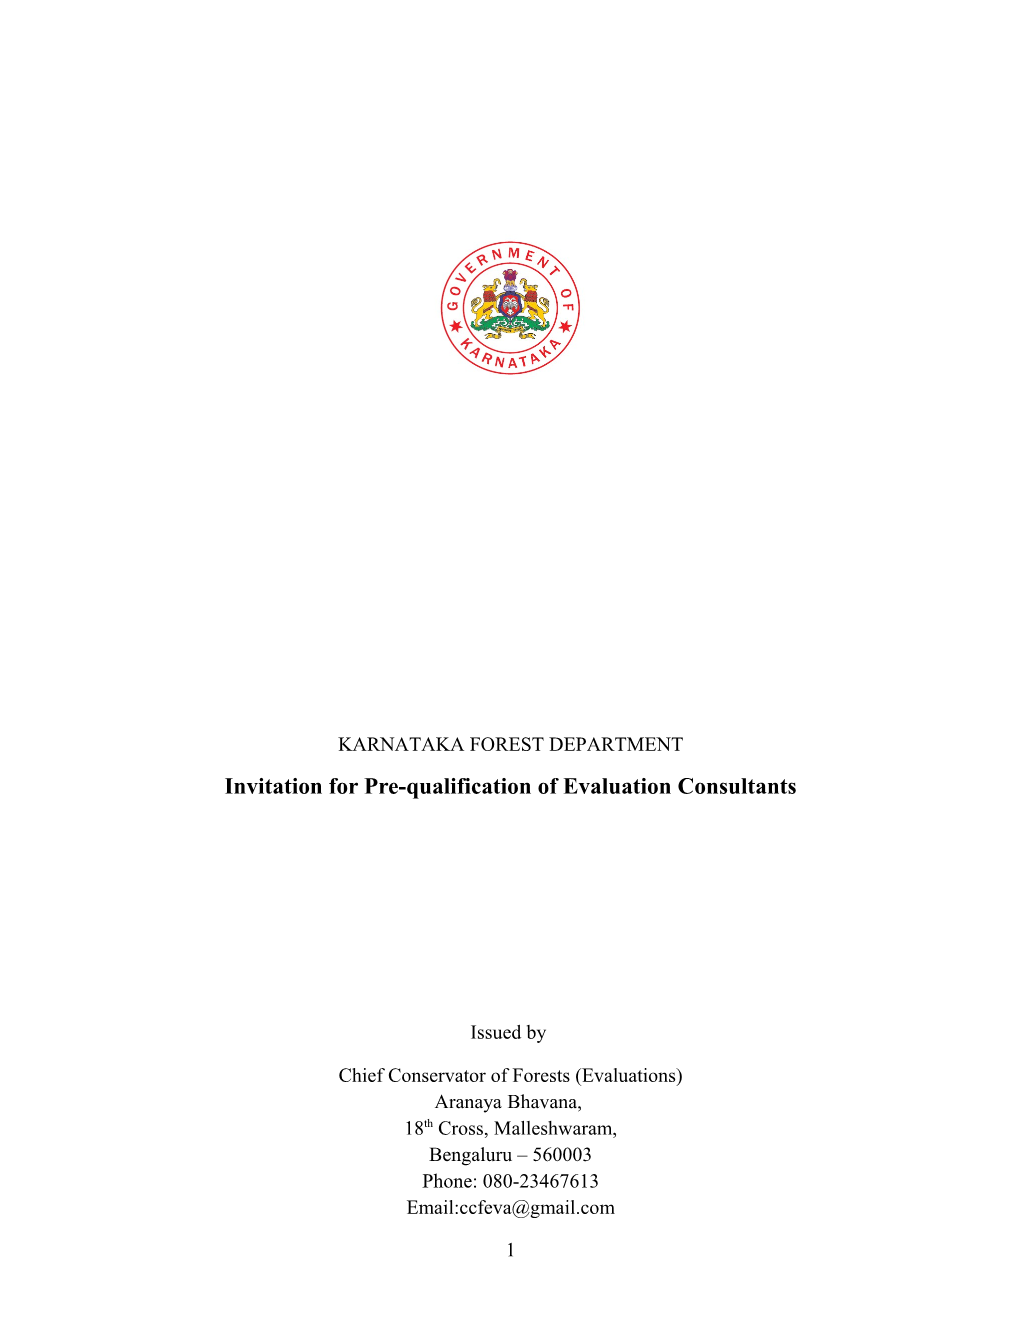 Invitation for Pre-Qualification of Evaluation Consultants